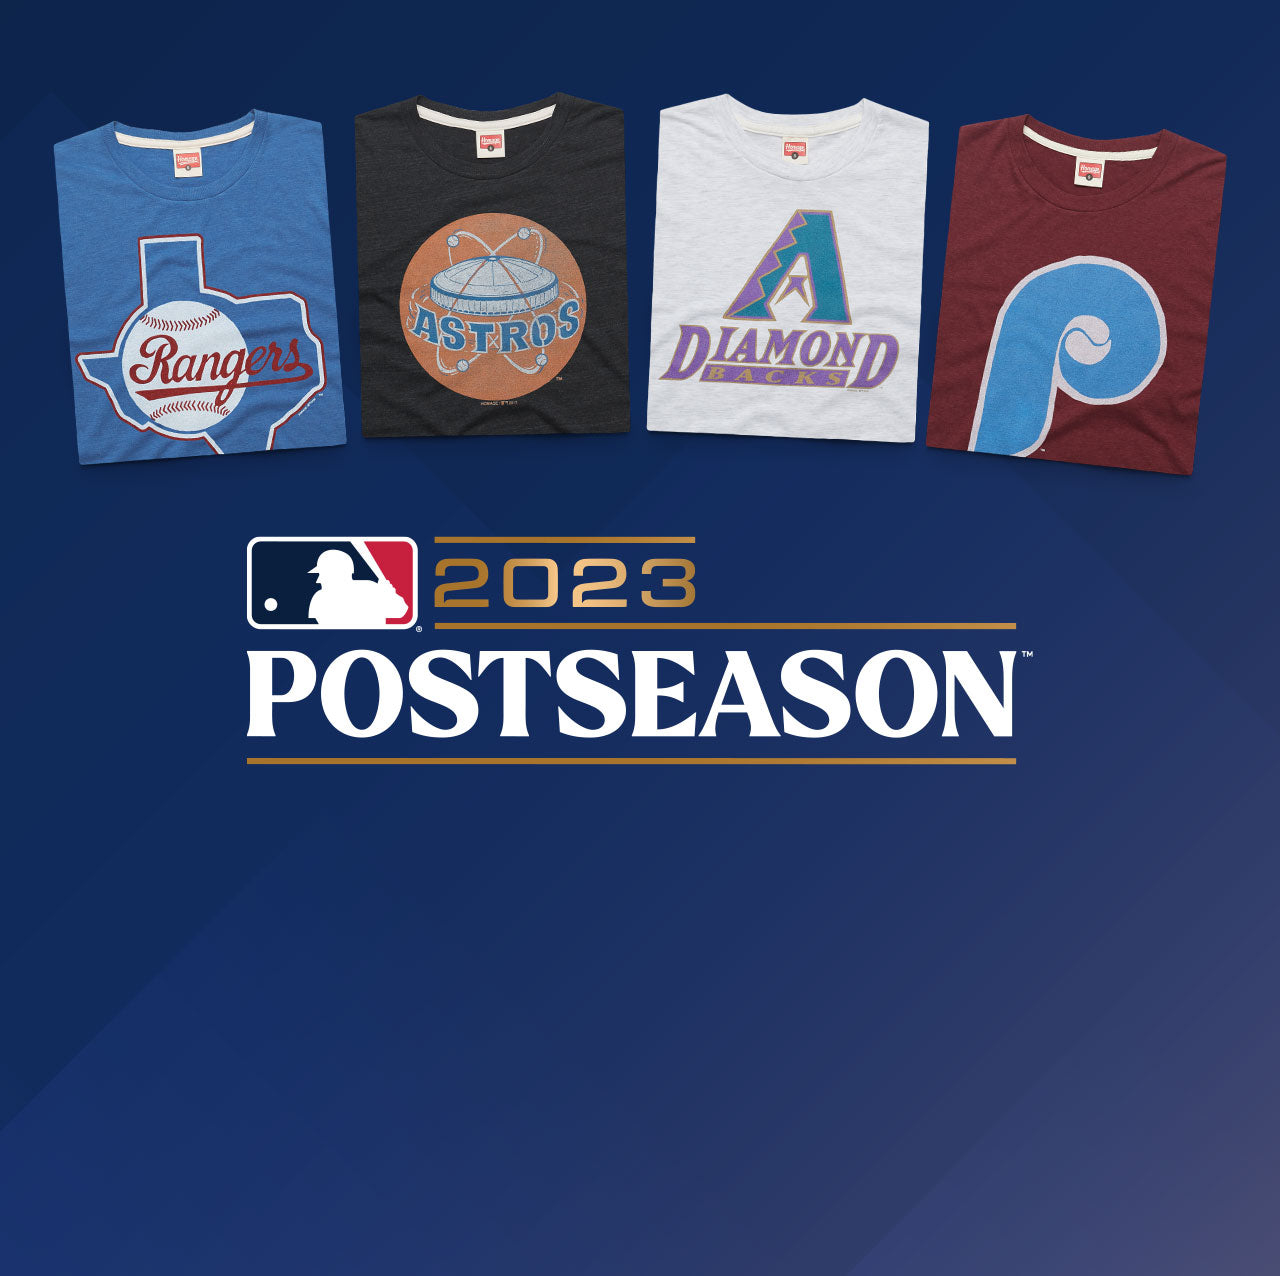 Rick and Morty Baseball MLB Houston Astros Shirt, Astros Gift For